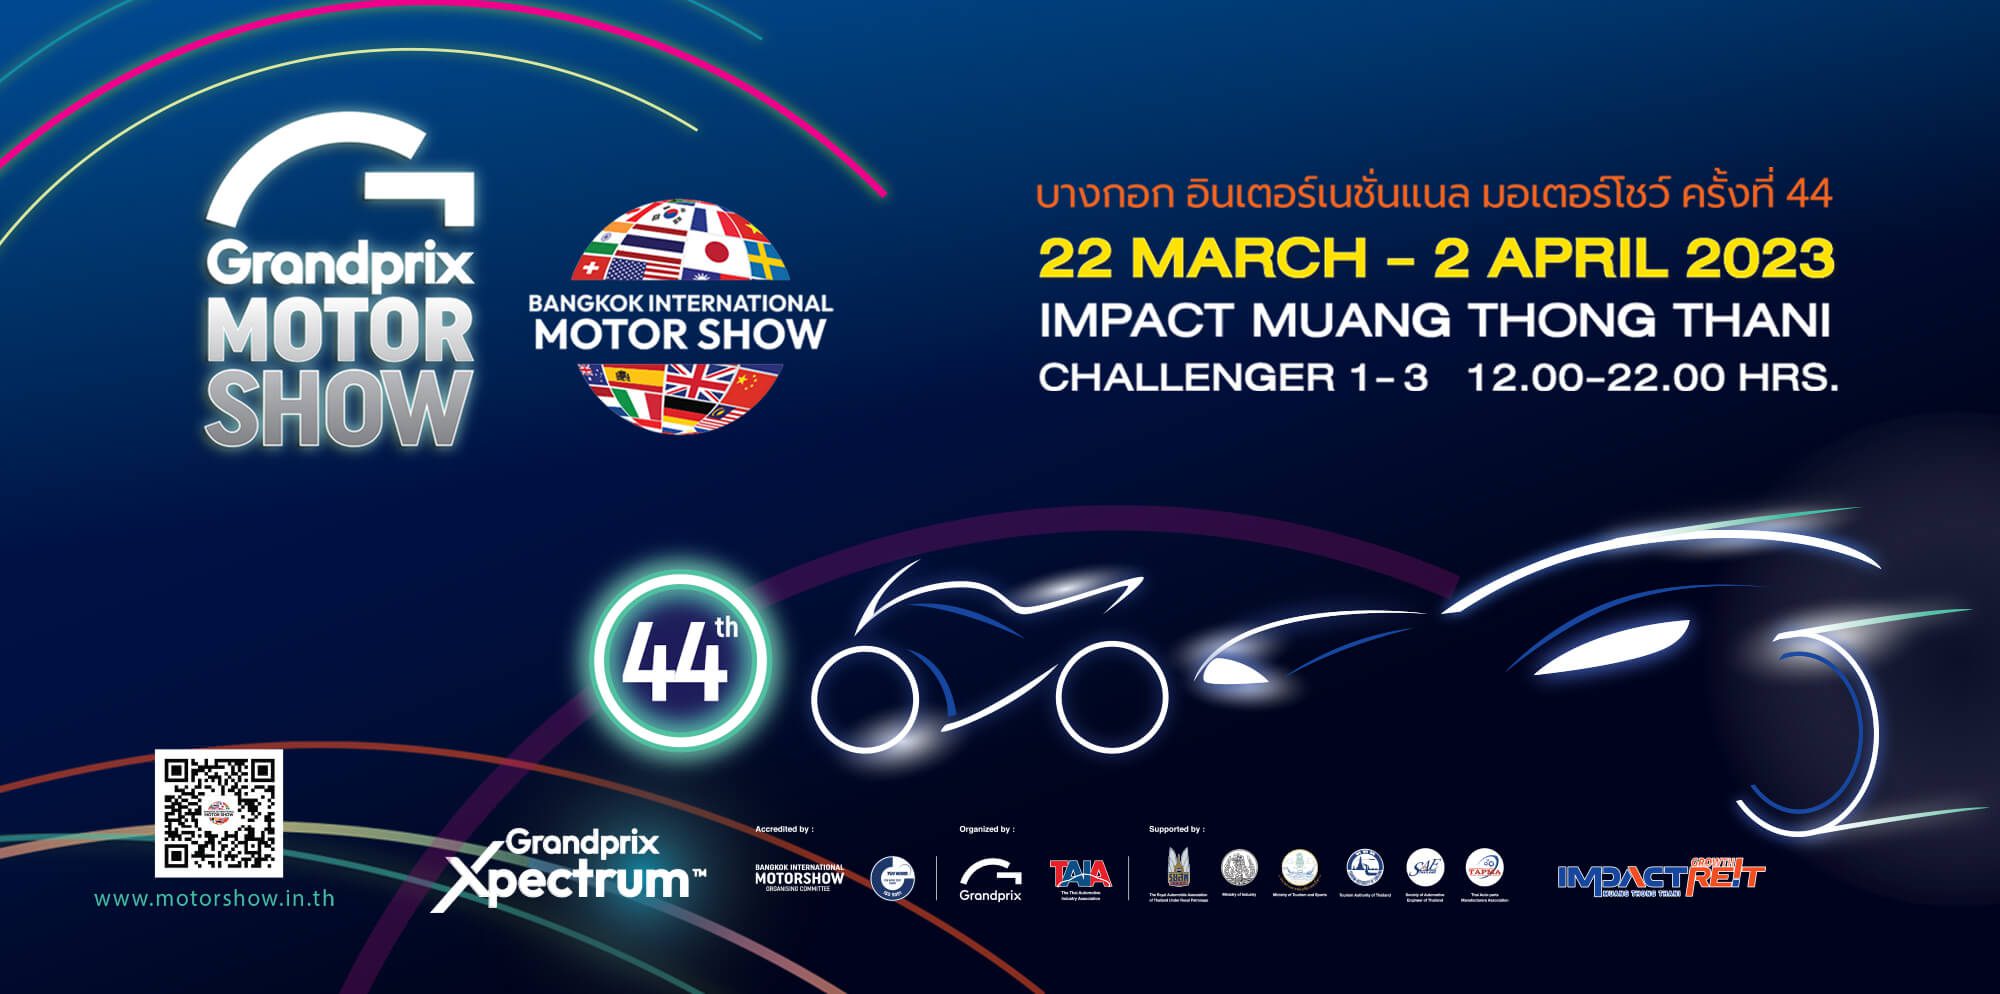 INTERNATIONAL NEW Bangkok International Motor Show